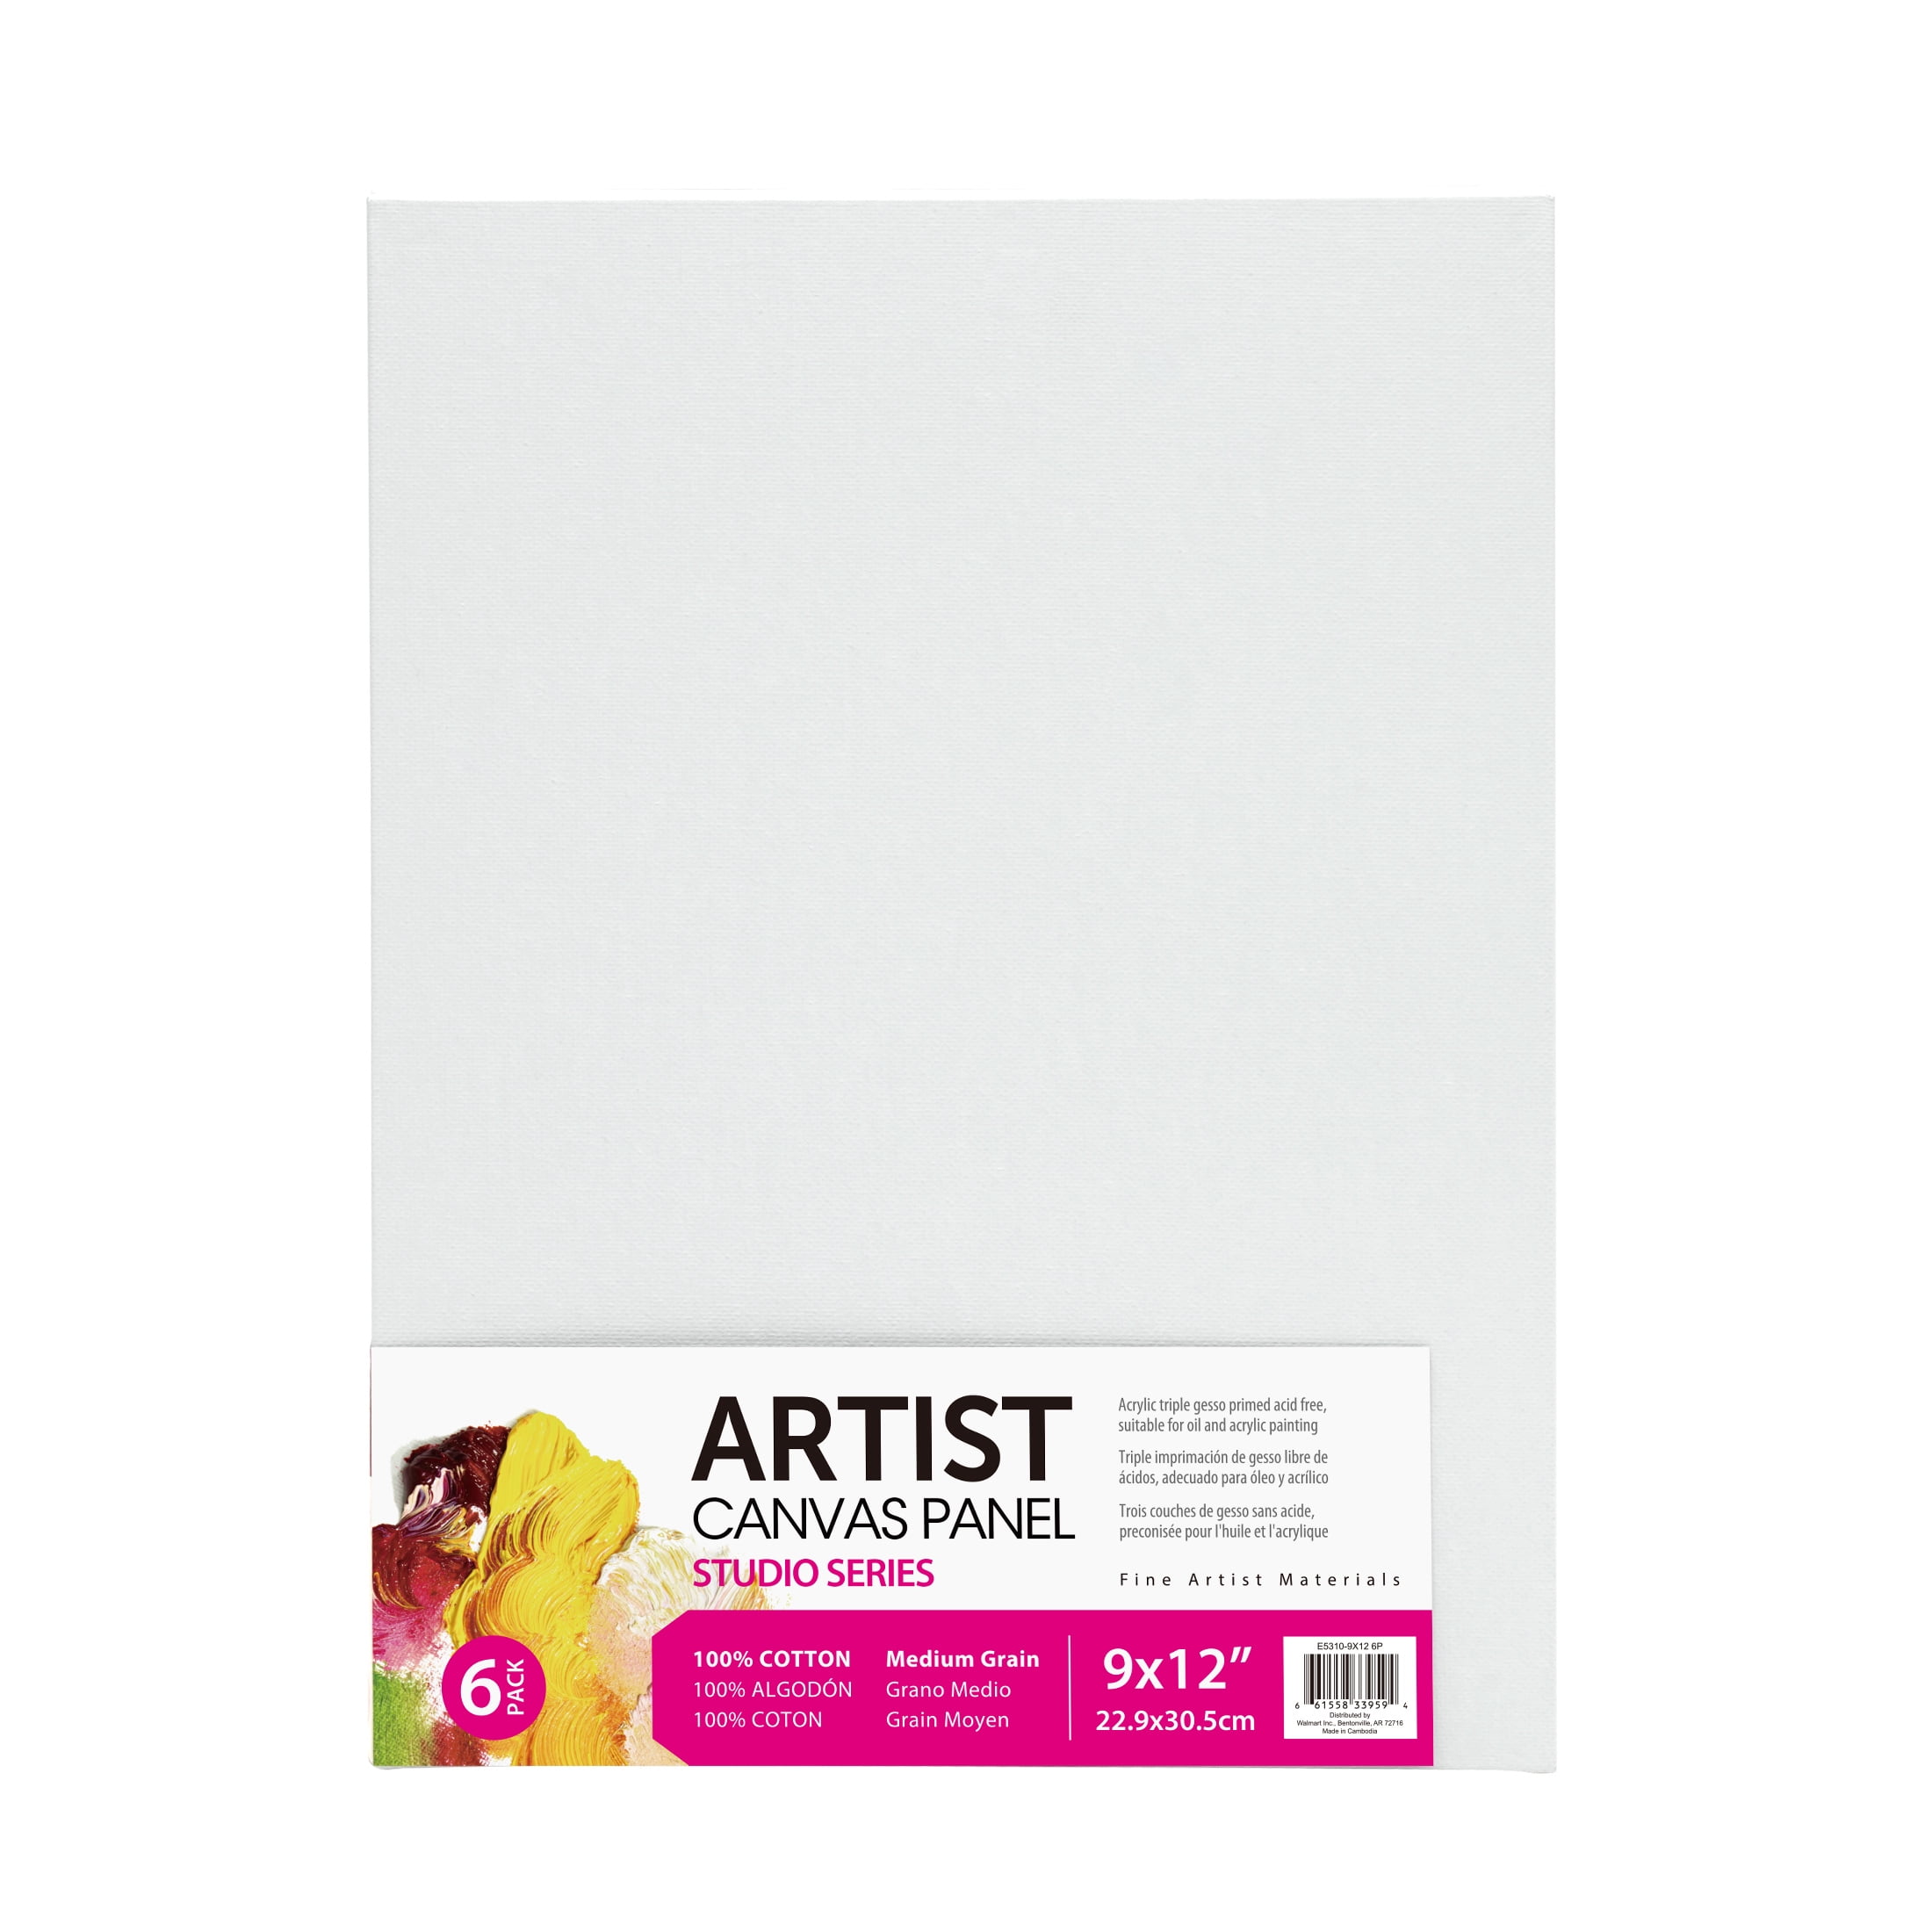 Studio 100% Cotton Acid Free White Canvas, 9"x12", 6 Pieces